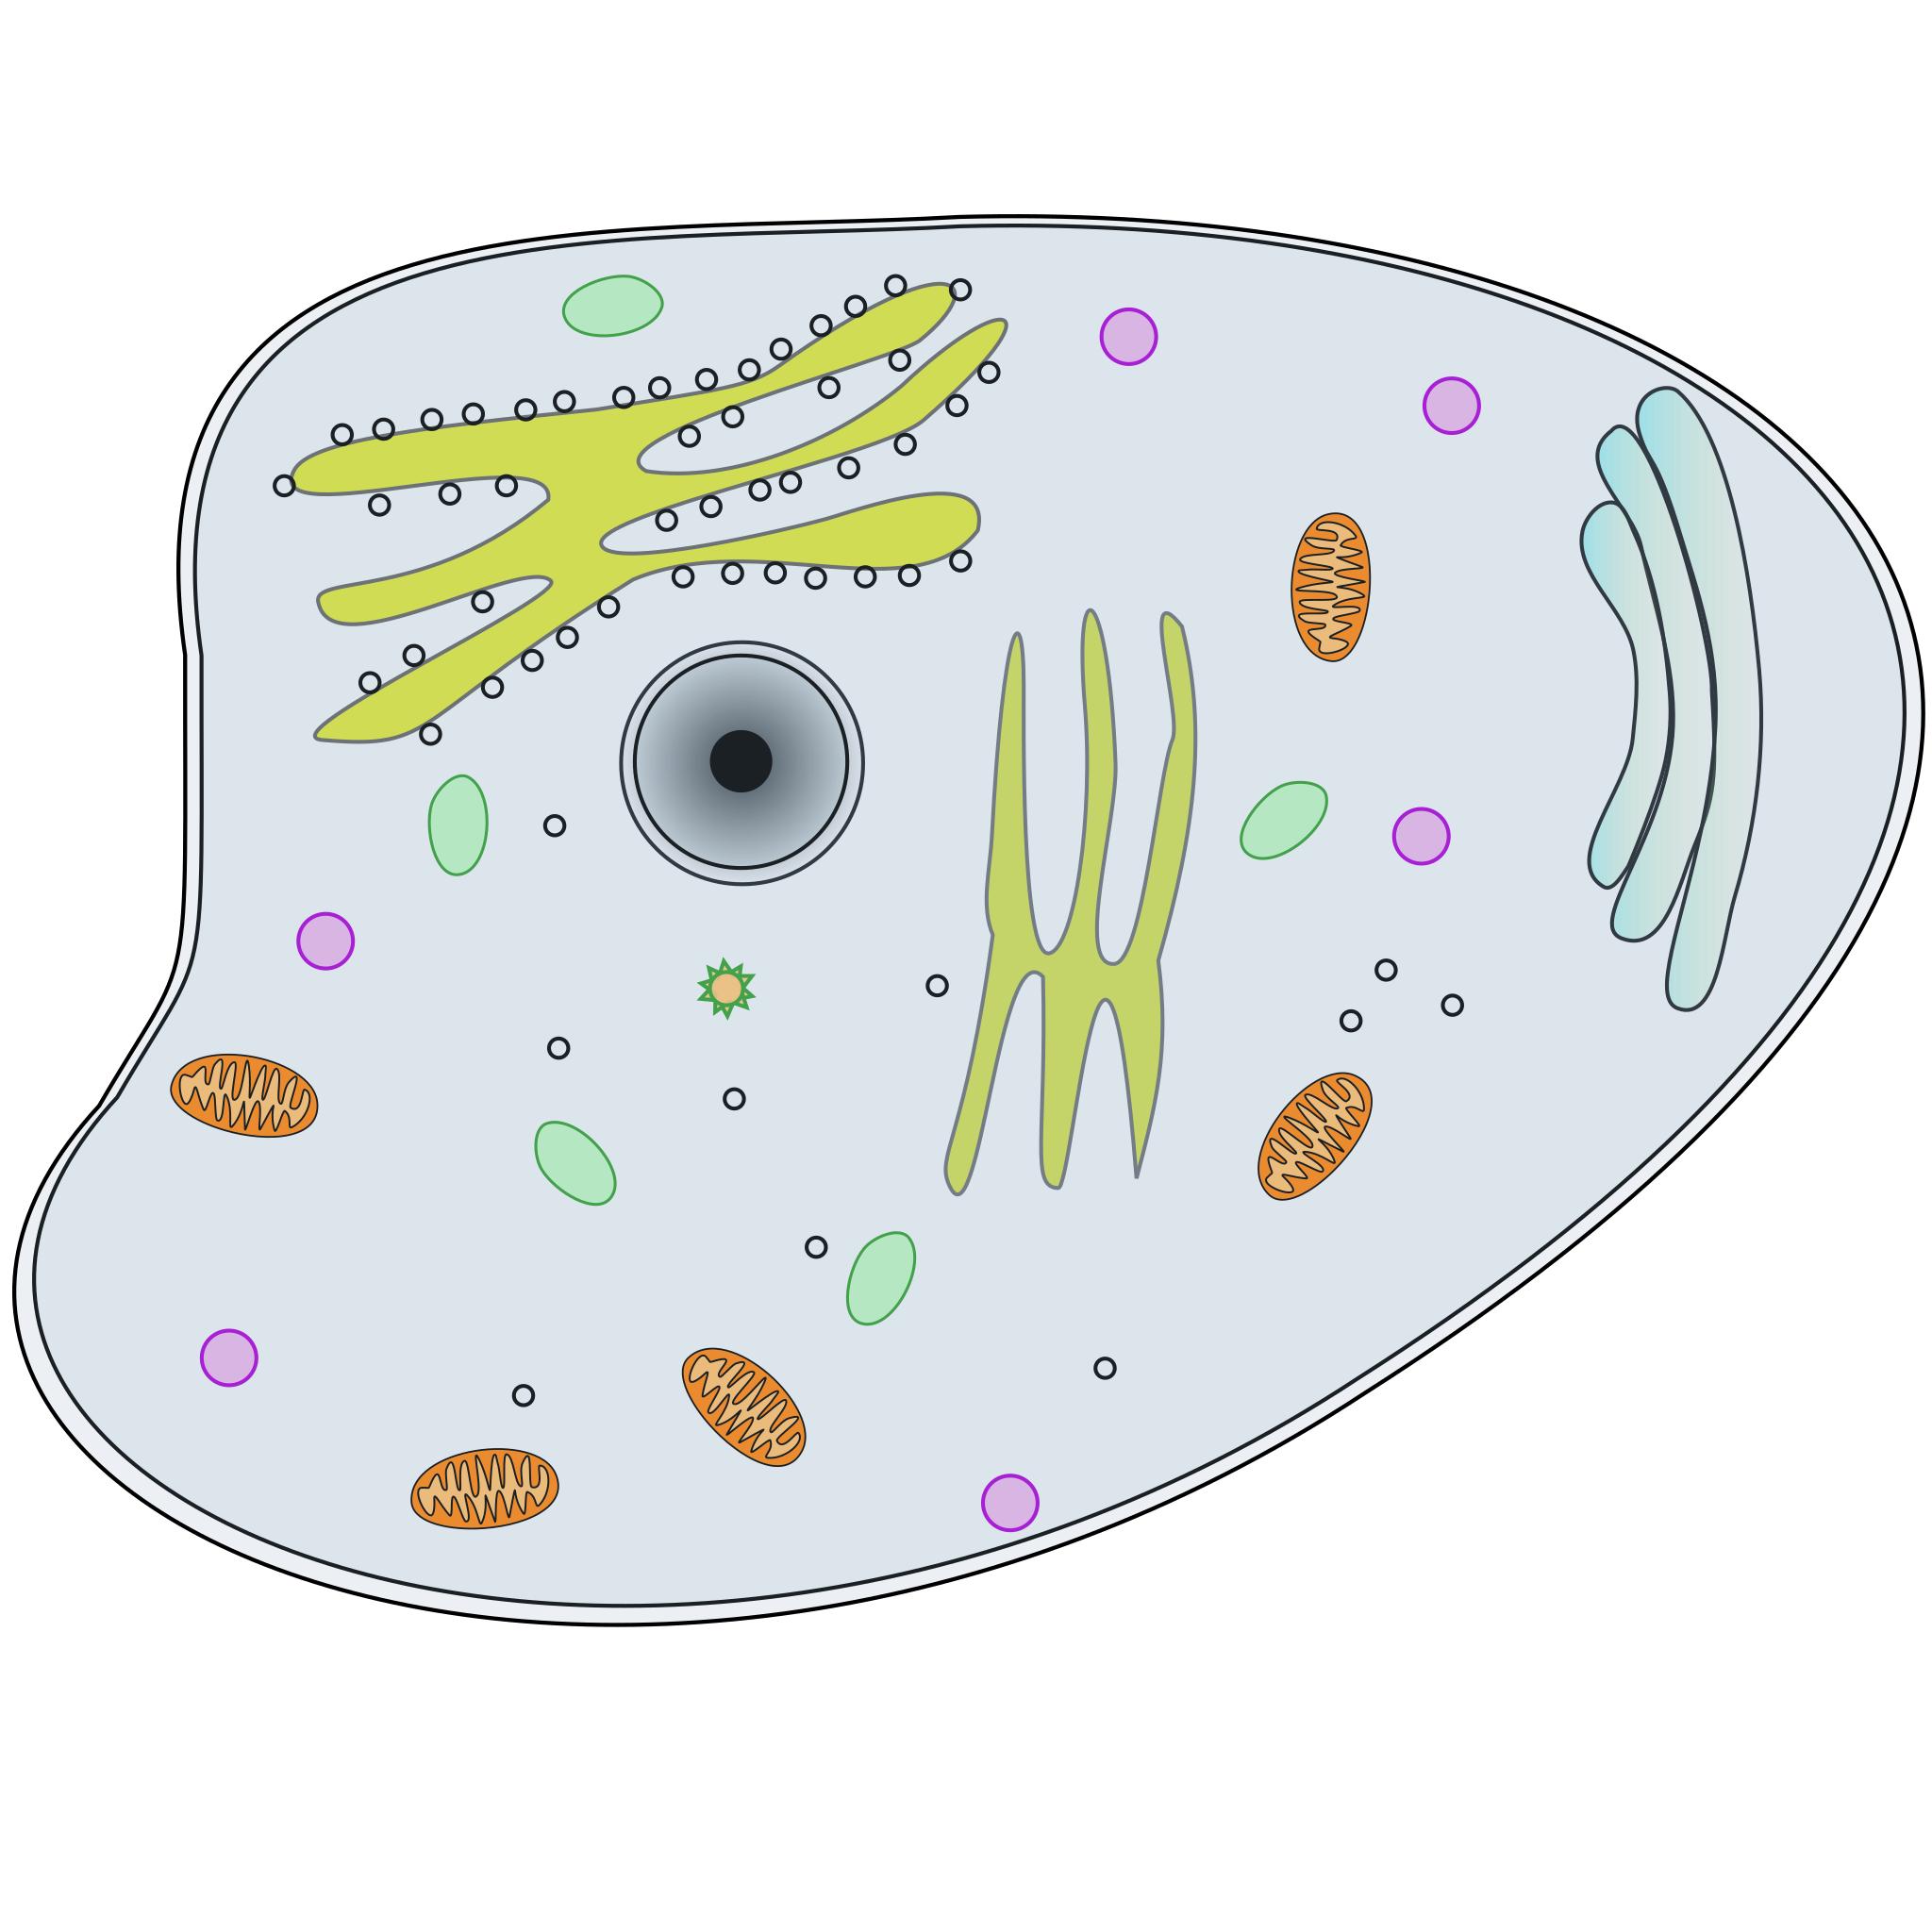 Цитоплазма эукариотической клетки